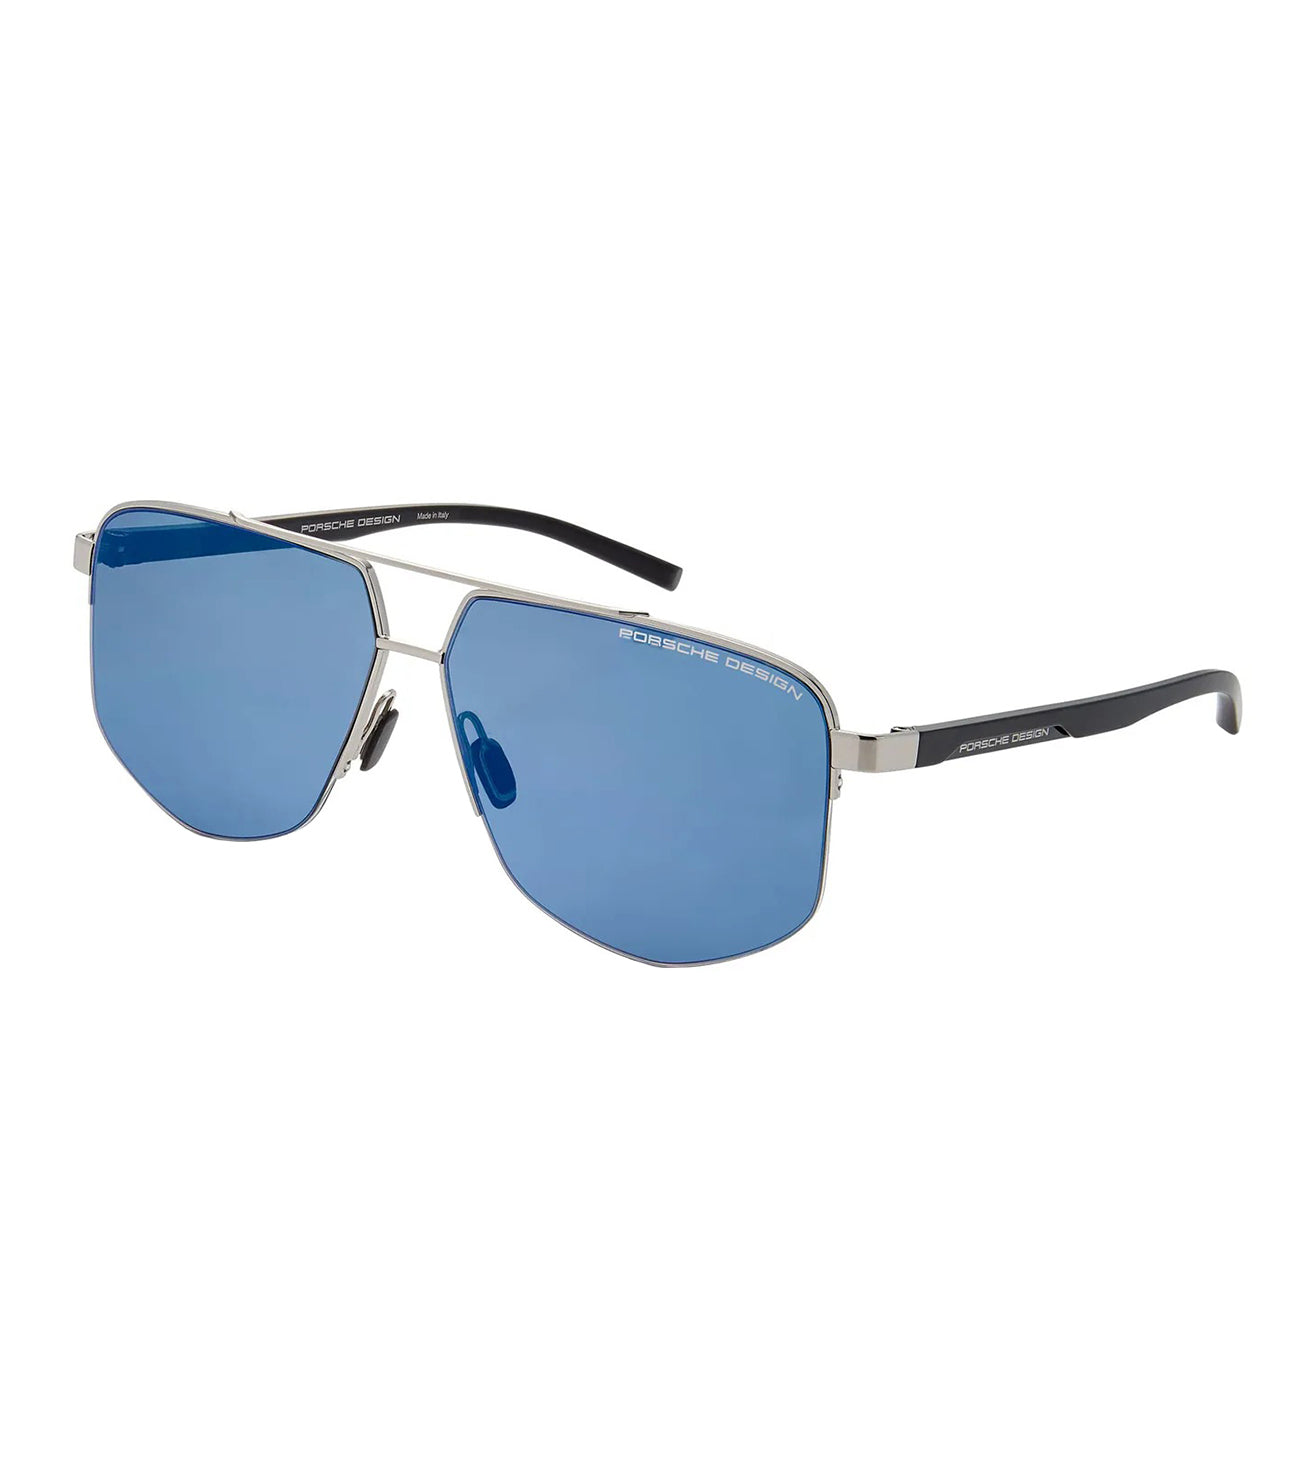 Porsche Design Men's Dark Blue-Mirrored Aviator Sunglasses